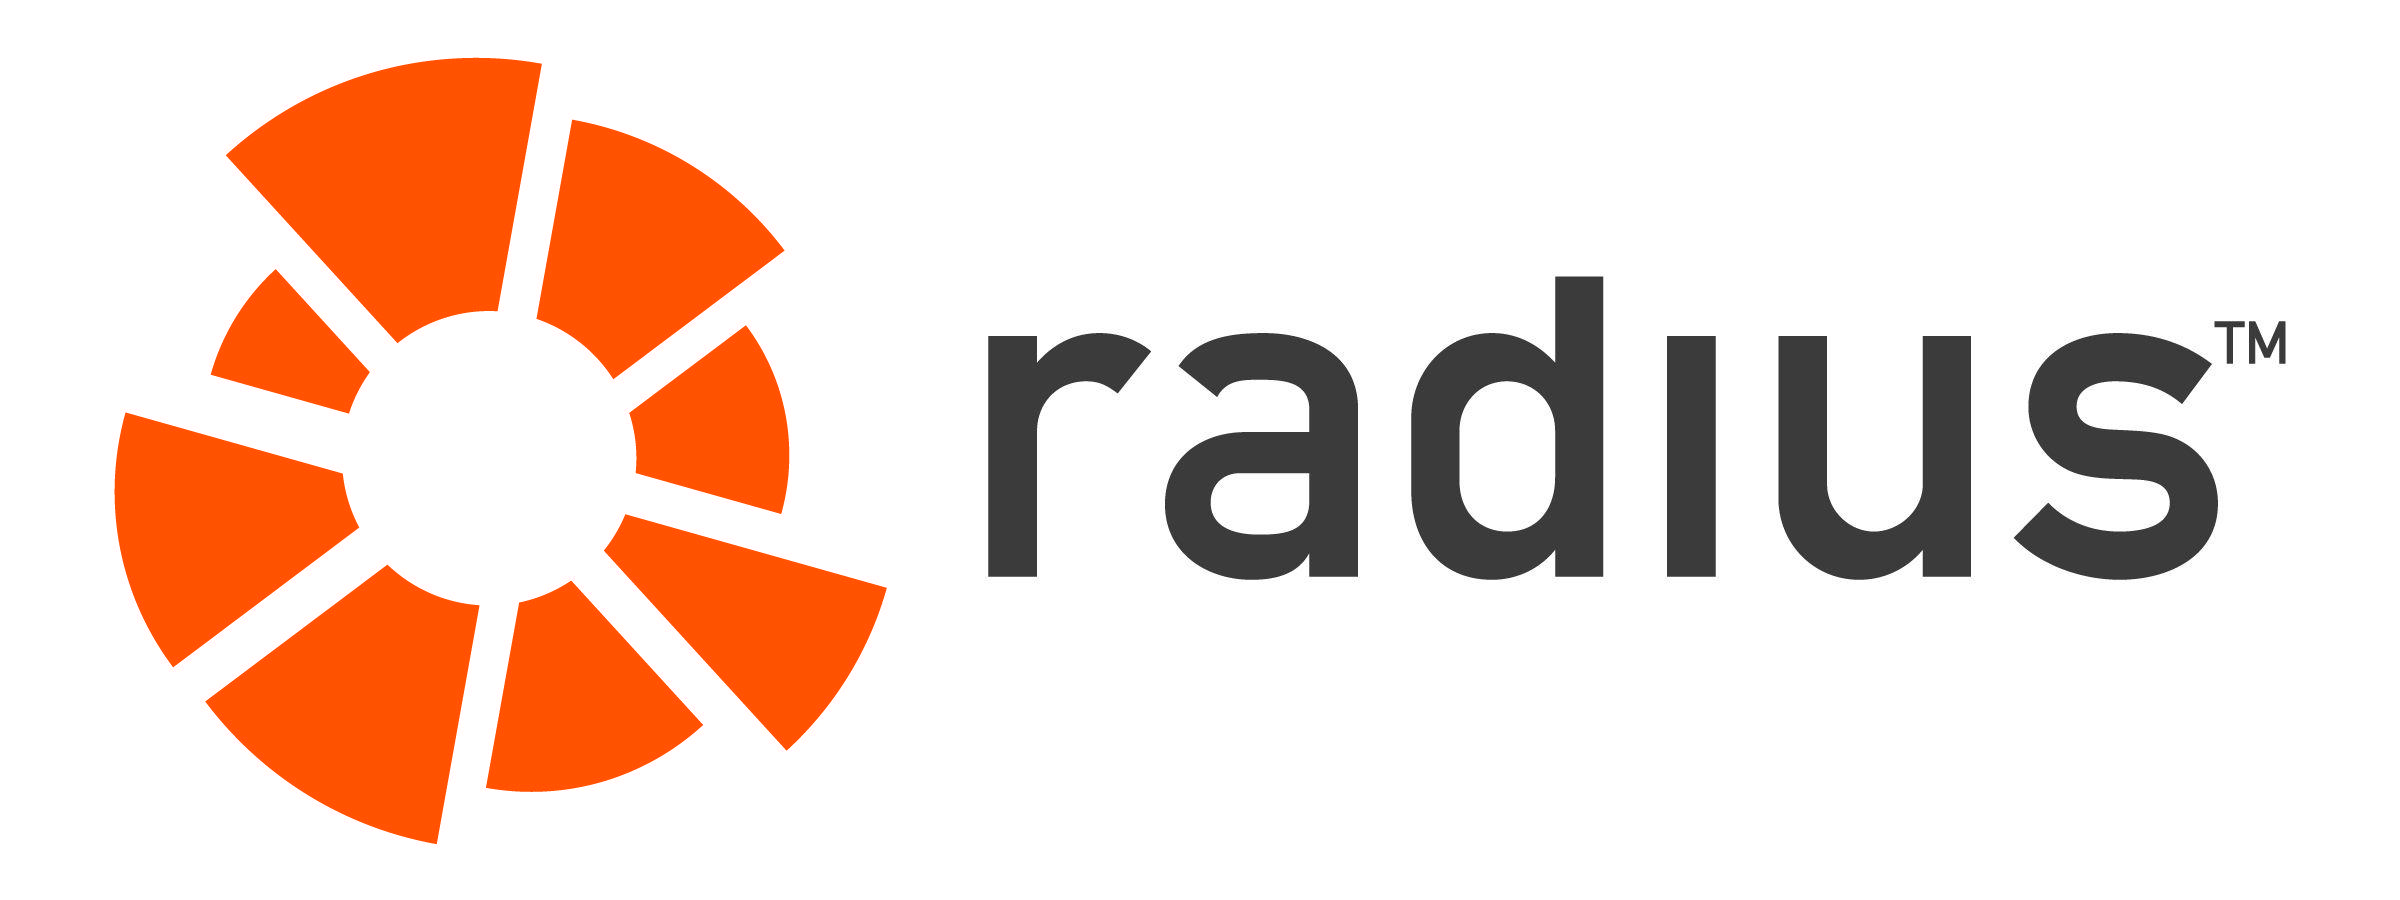 Radius Logo - Radius Logos